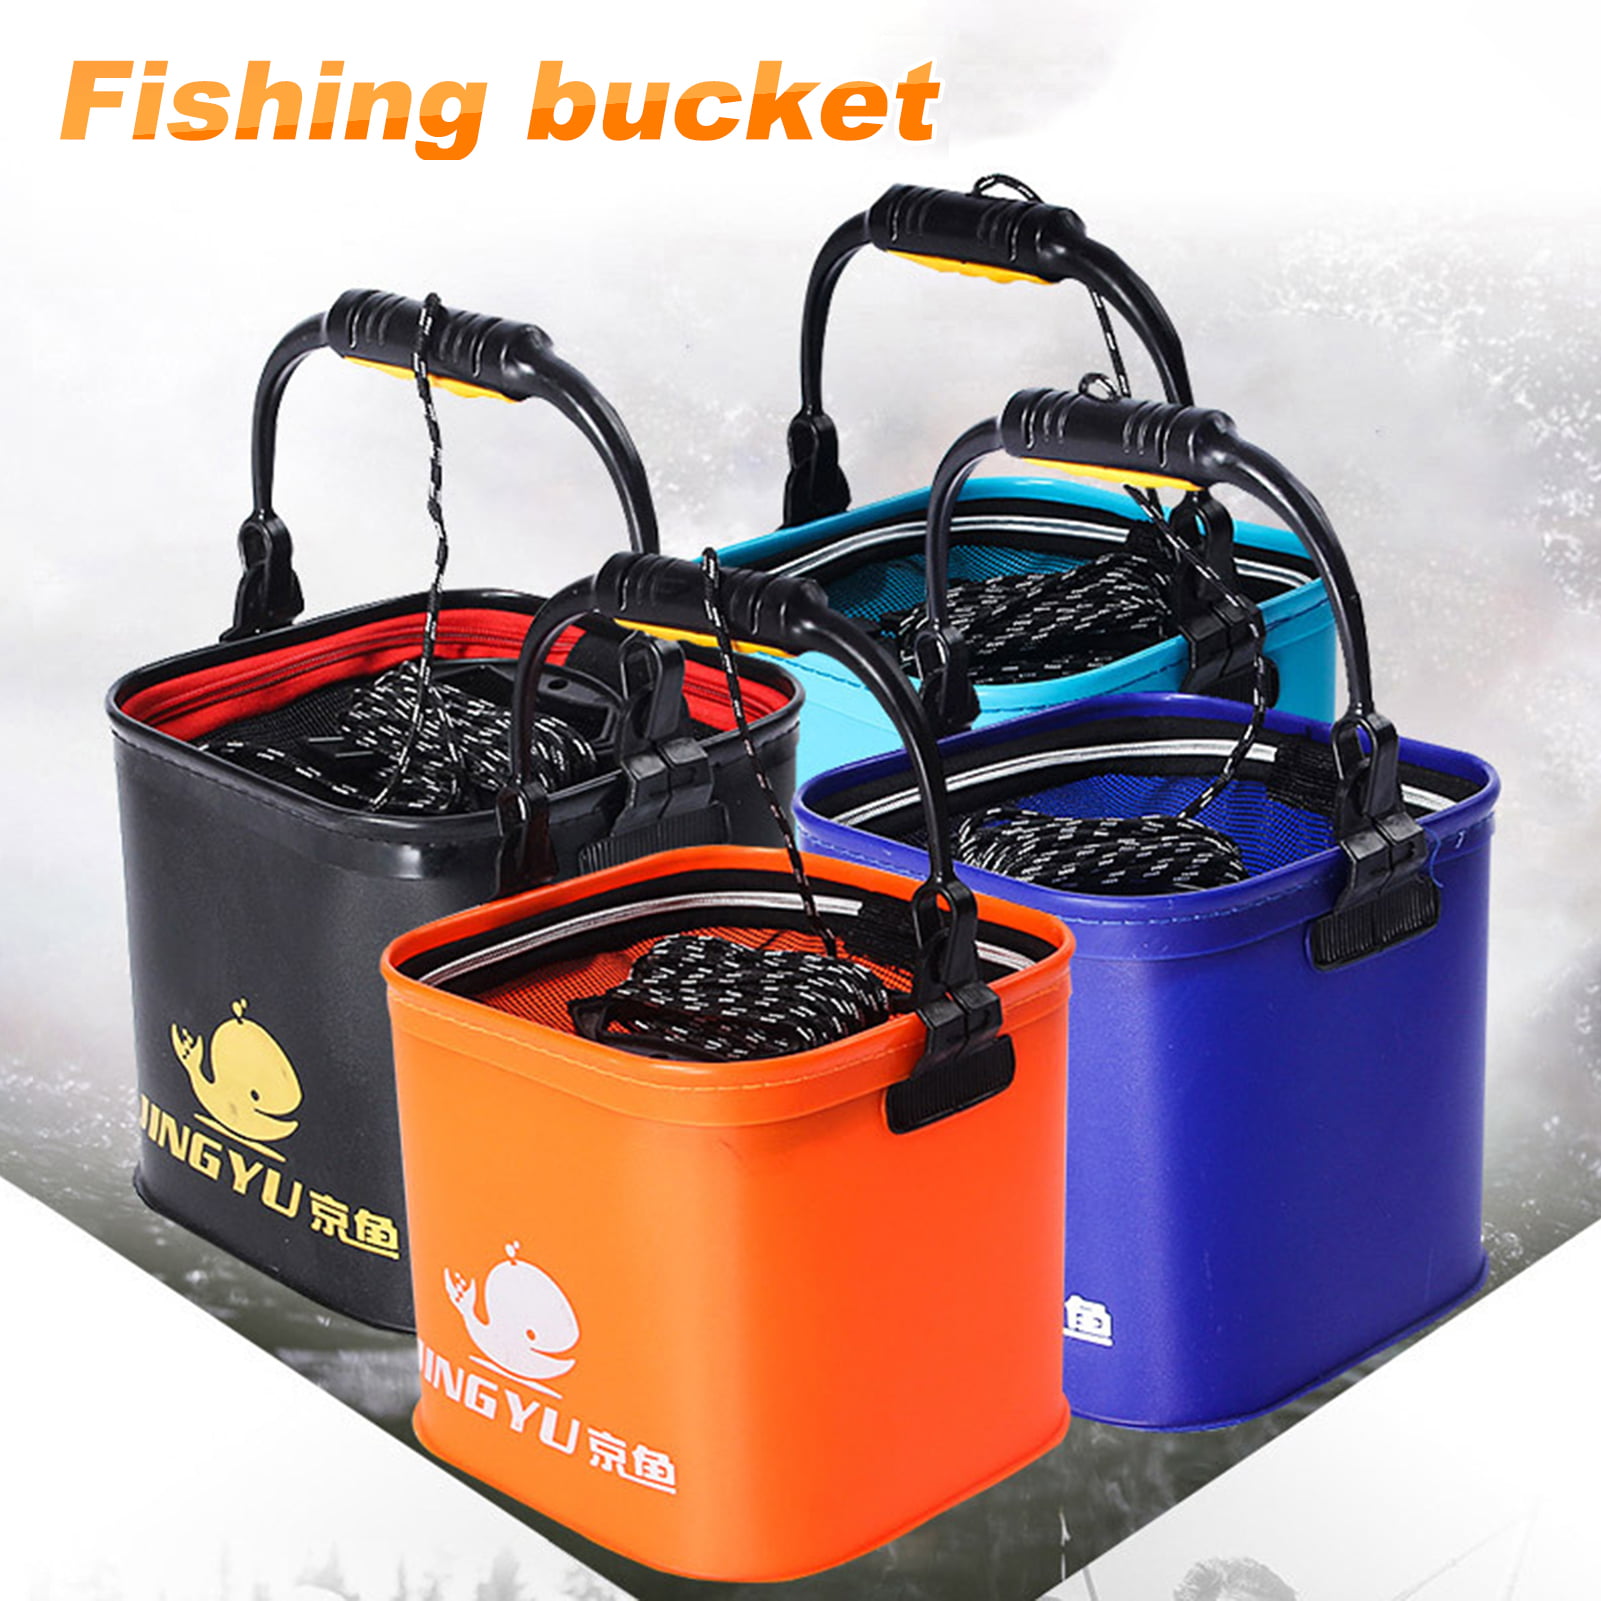 WHCDSTGJ Fishing Bucket, Multifunctional Foldable Portable Fishing Bucket,  and 8 Gallon EVA Fish Bucket are Suitable for Storing Live Fish and Fresh Fish  Bait. (size3gallon) Black size3gallon